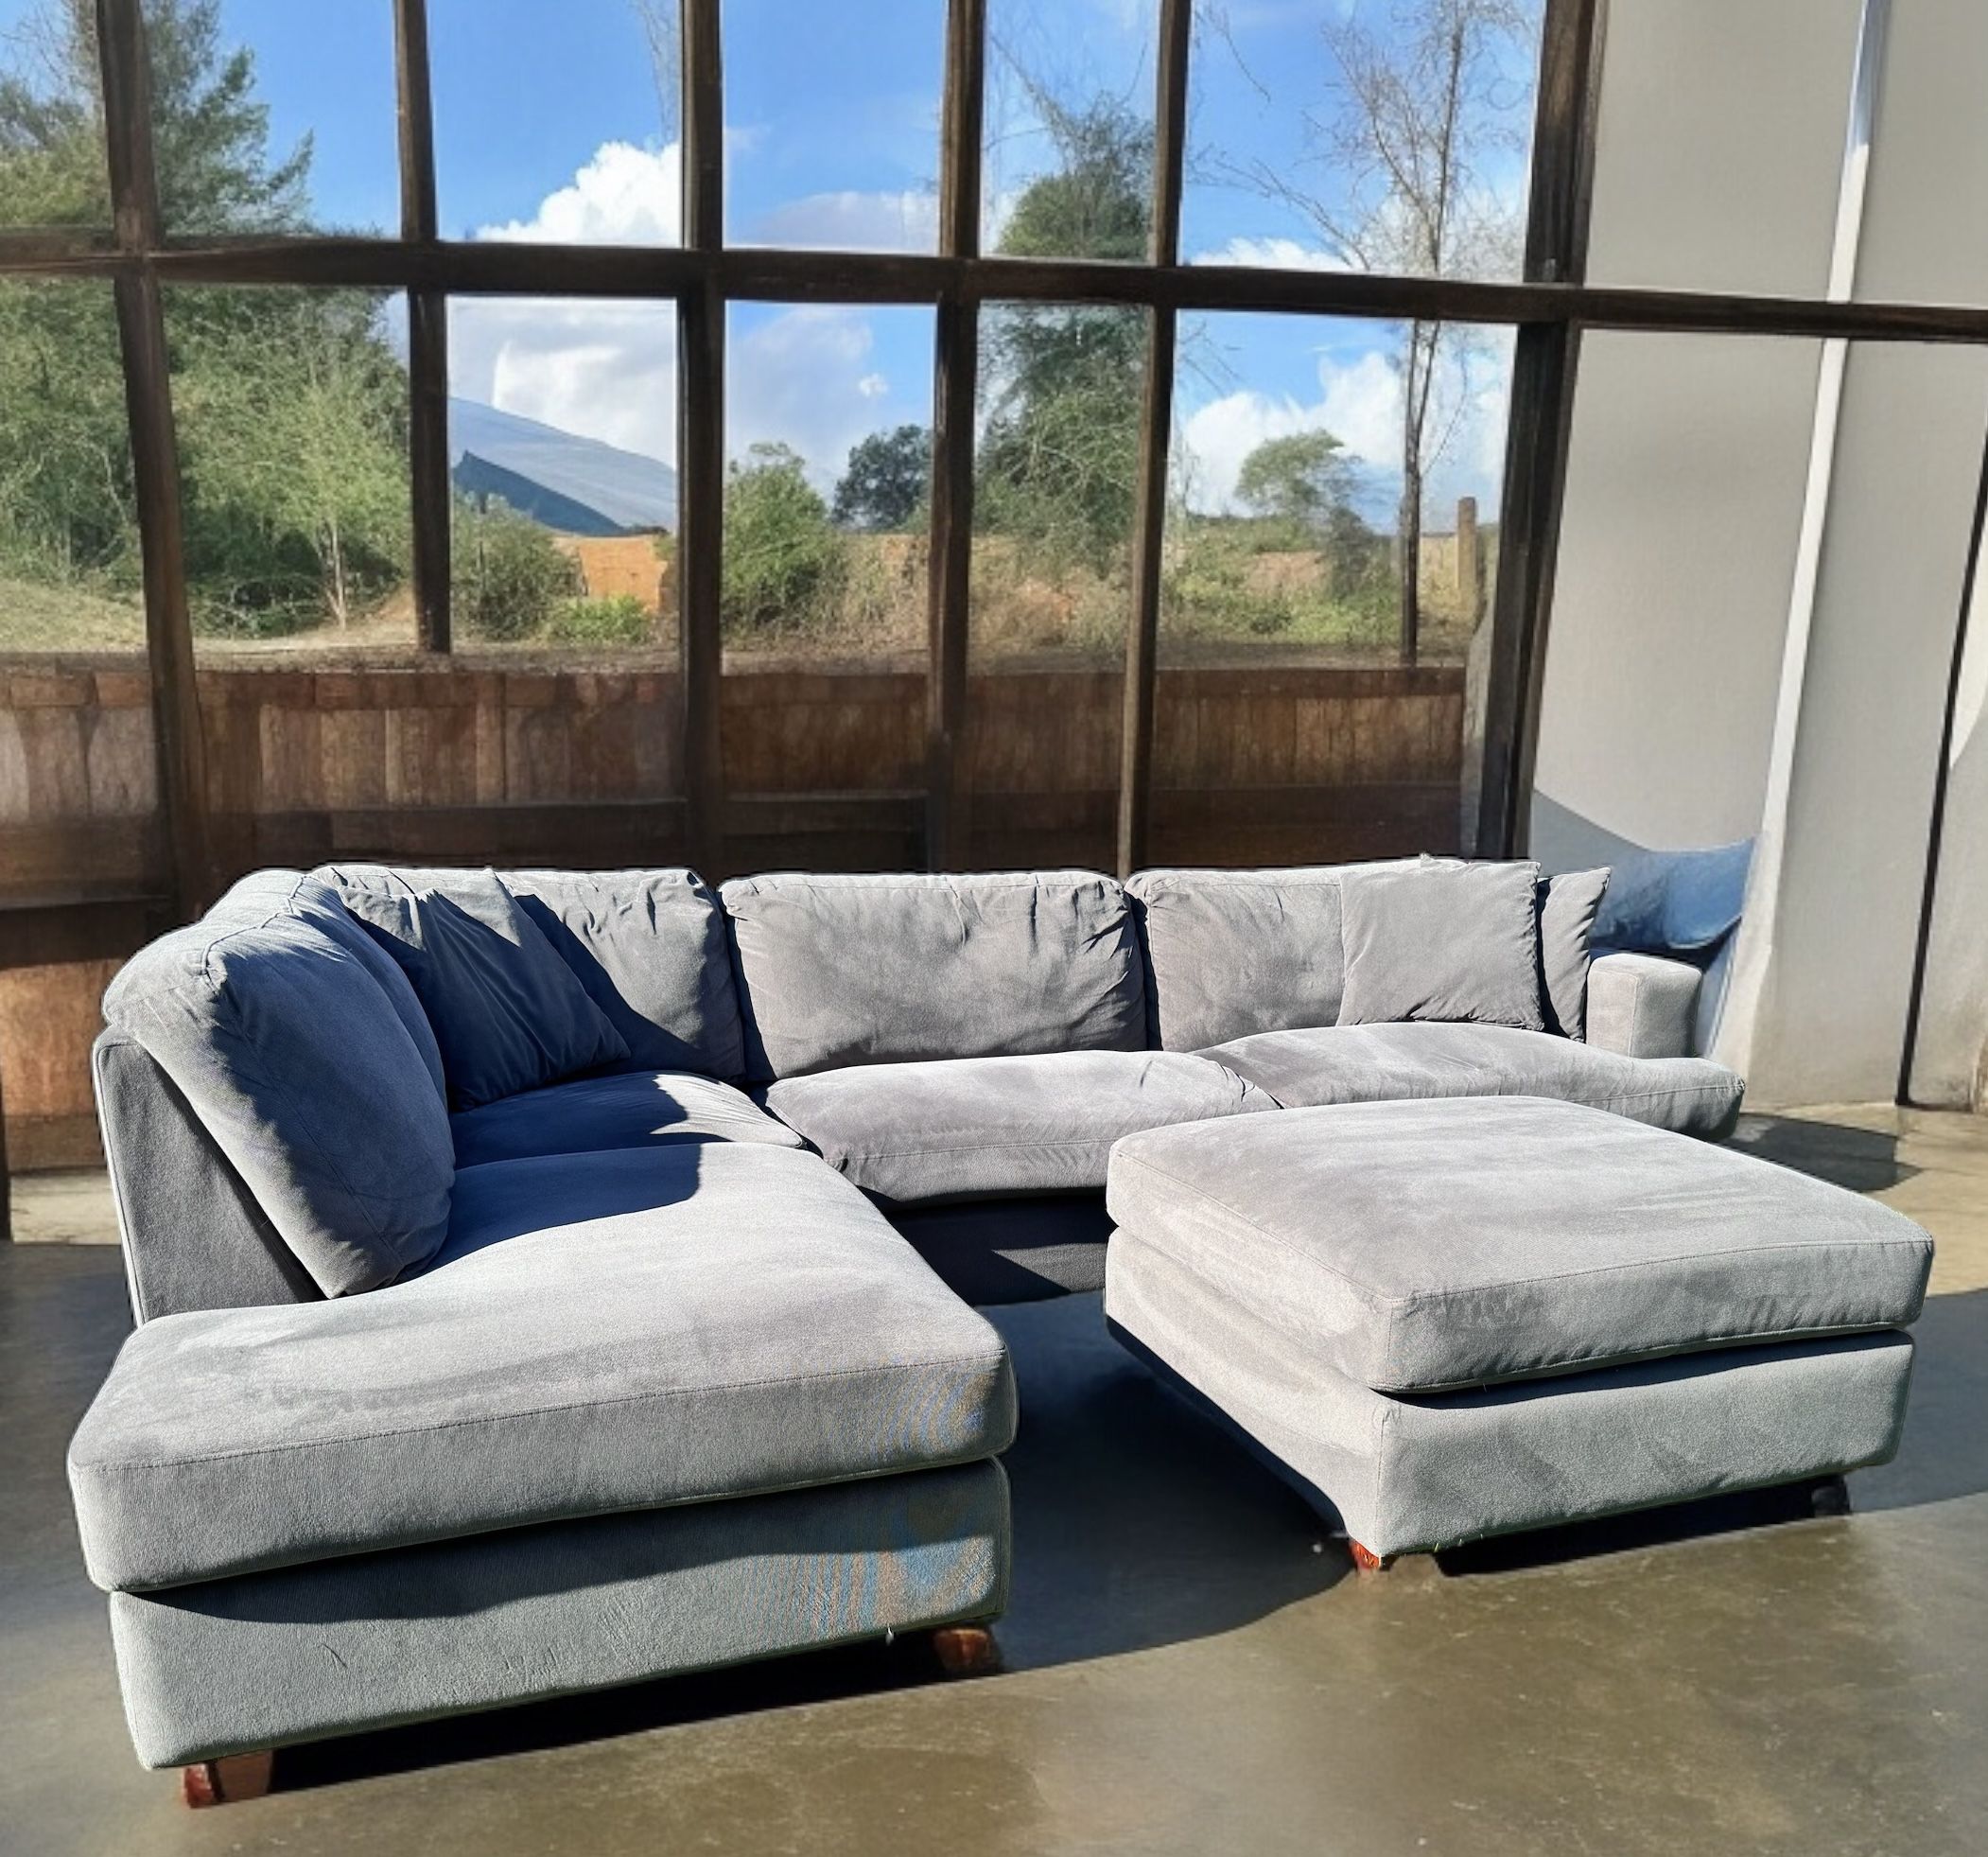 Big Comfy Sectional Sofa With Lounger And Ottoman